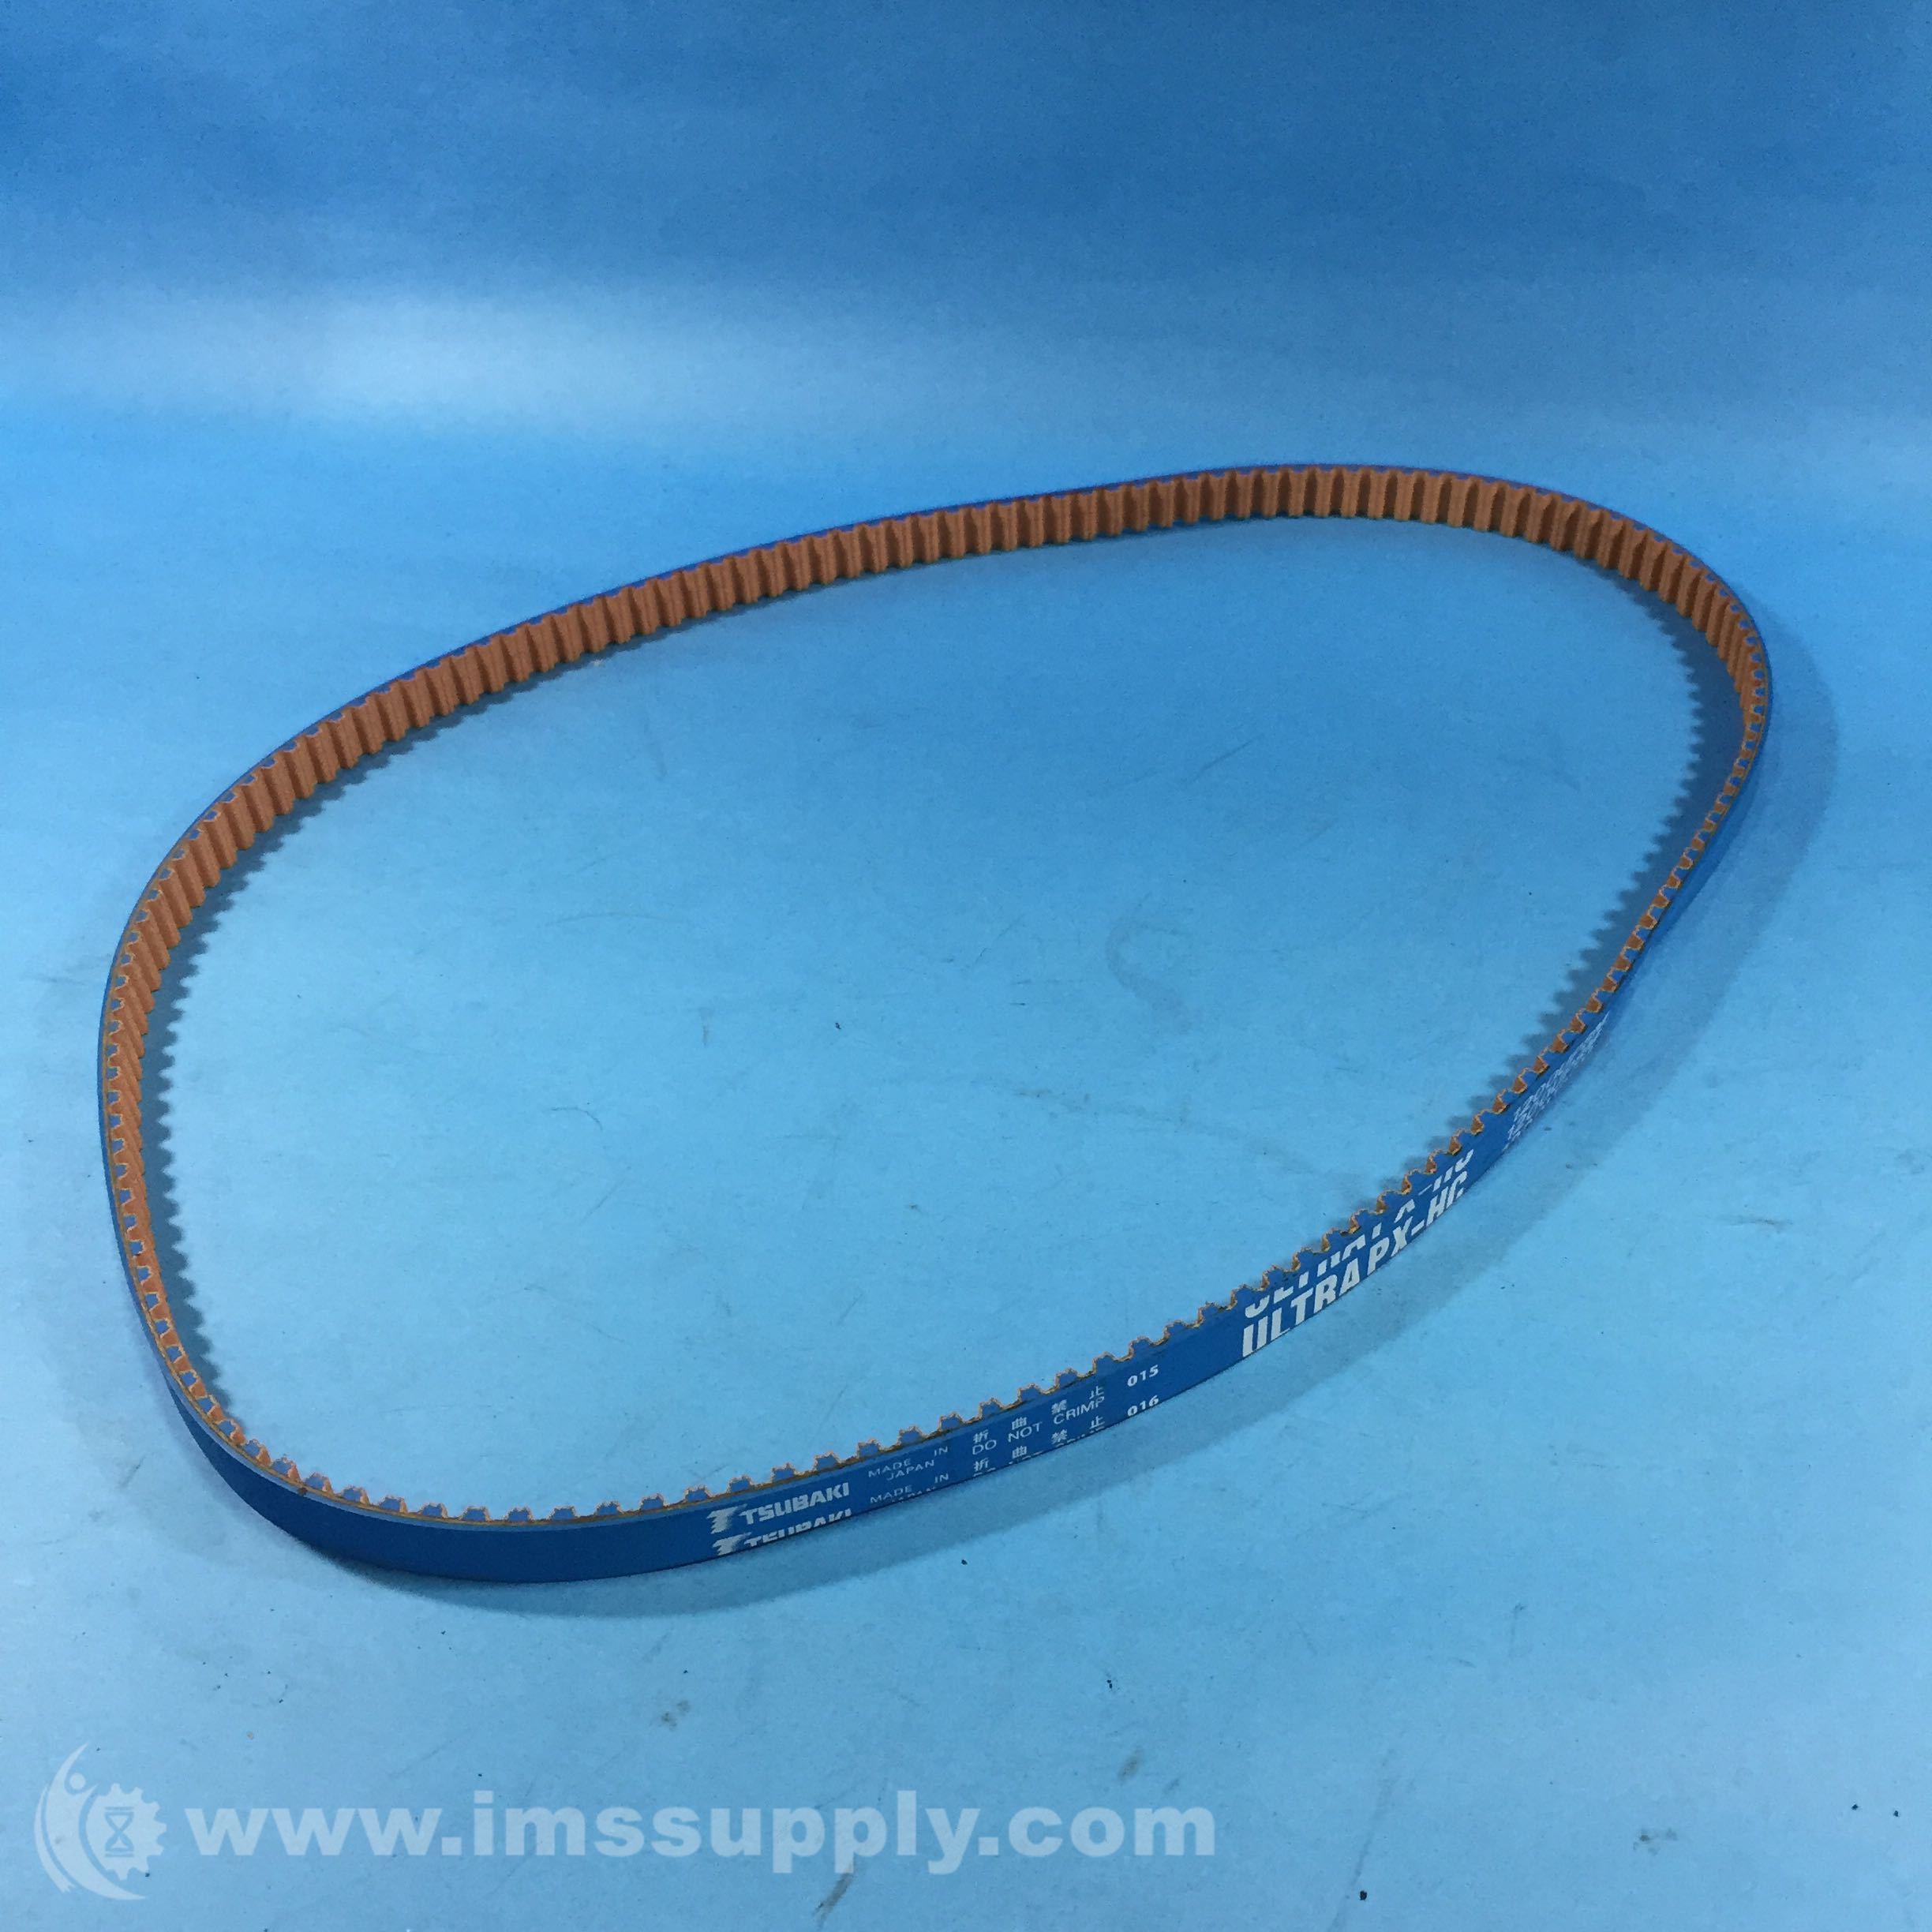 Tsubaki 1200UP8M Ultra PX-HC Timing Belt, 1200 mm Length IMS Supply